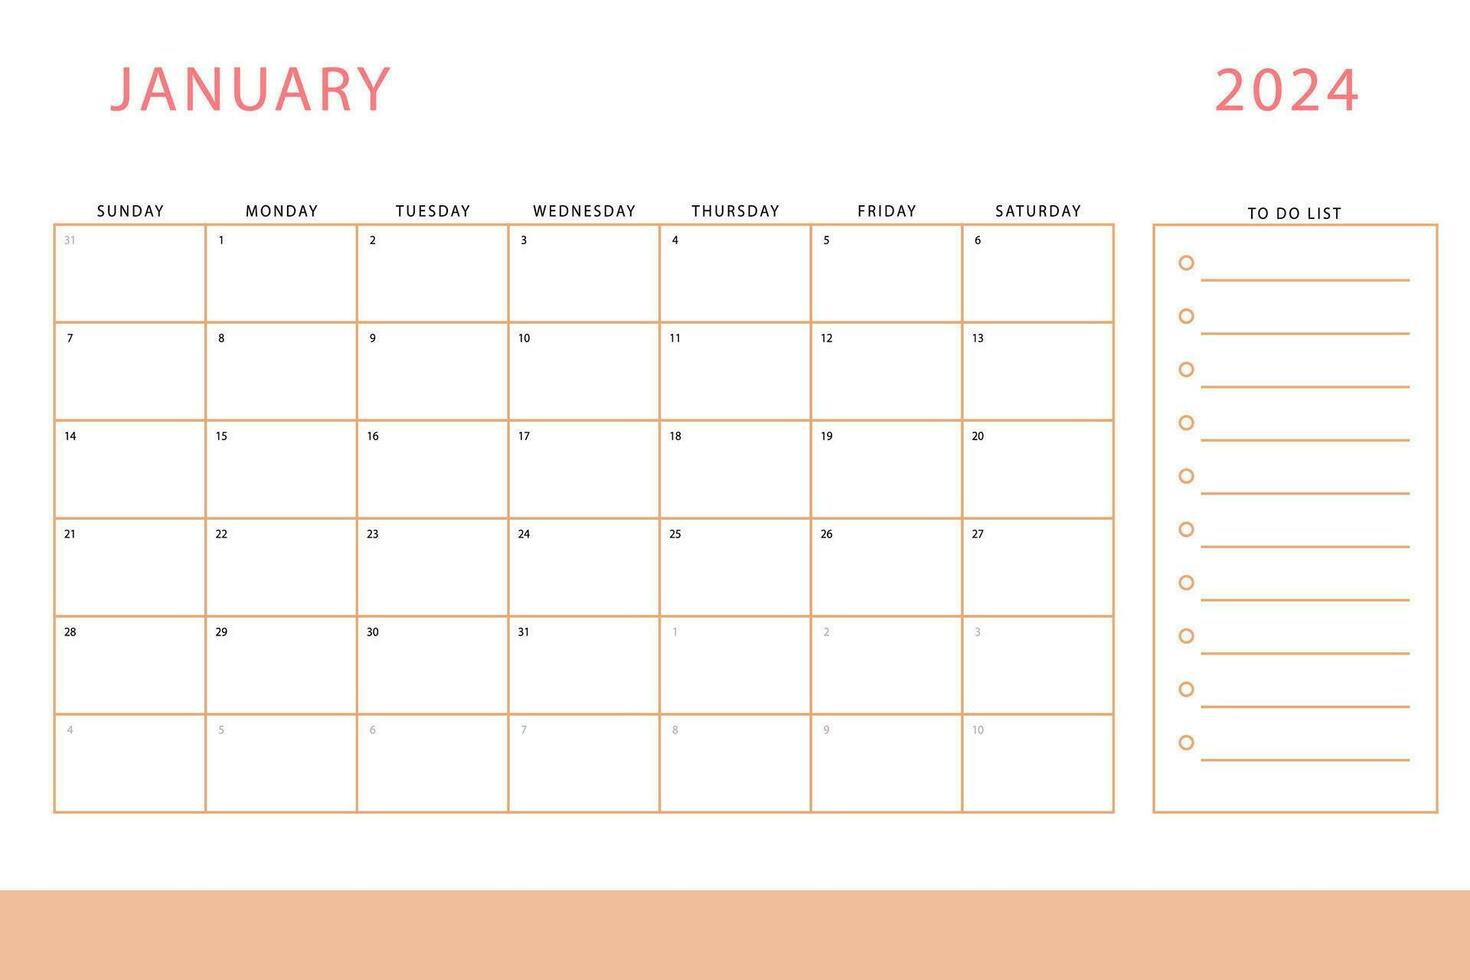 January 2024 calendar. Monthly planner template. Sunday start. Vector design